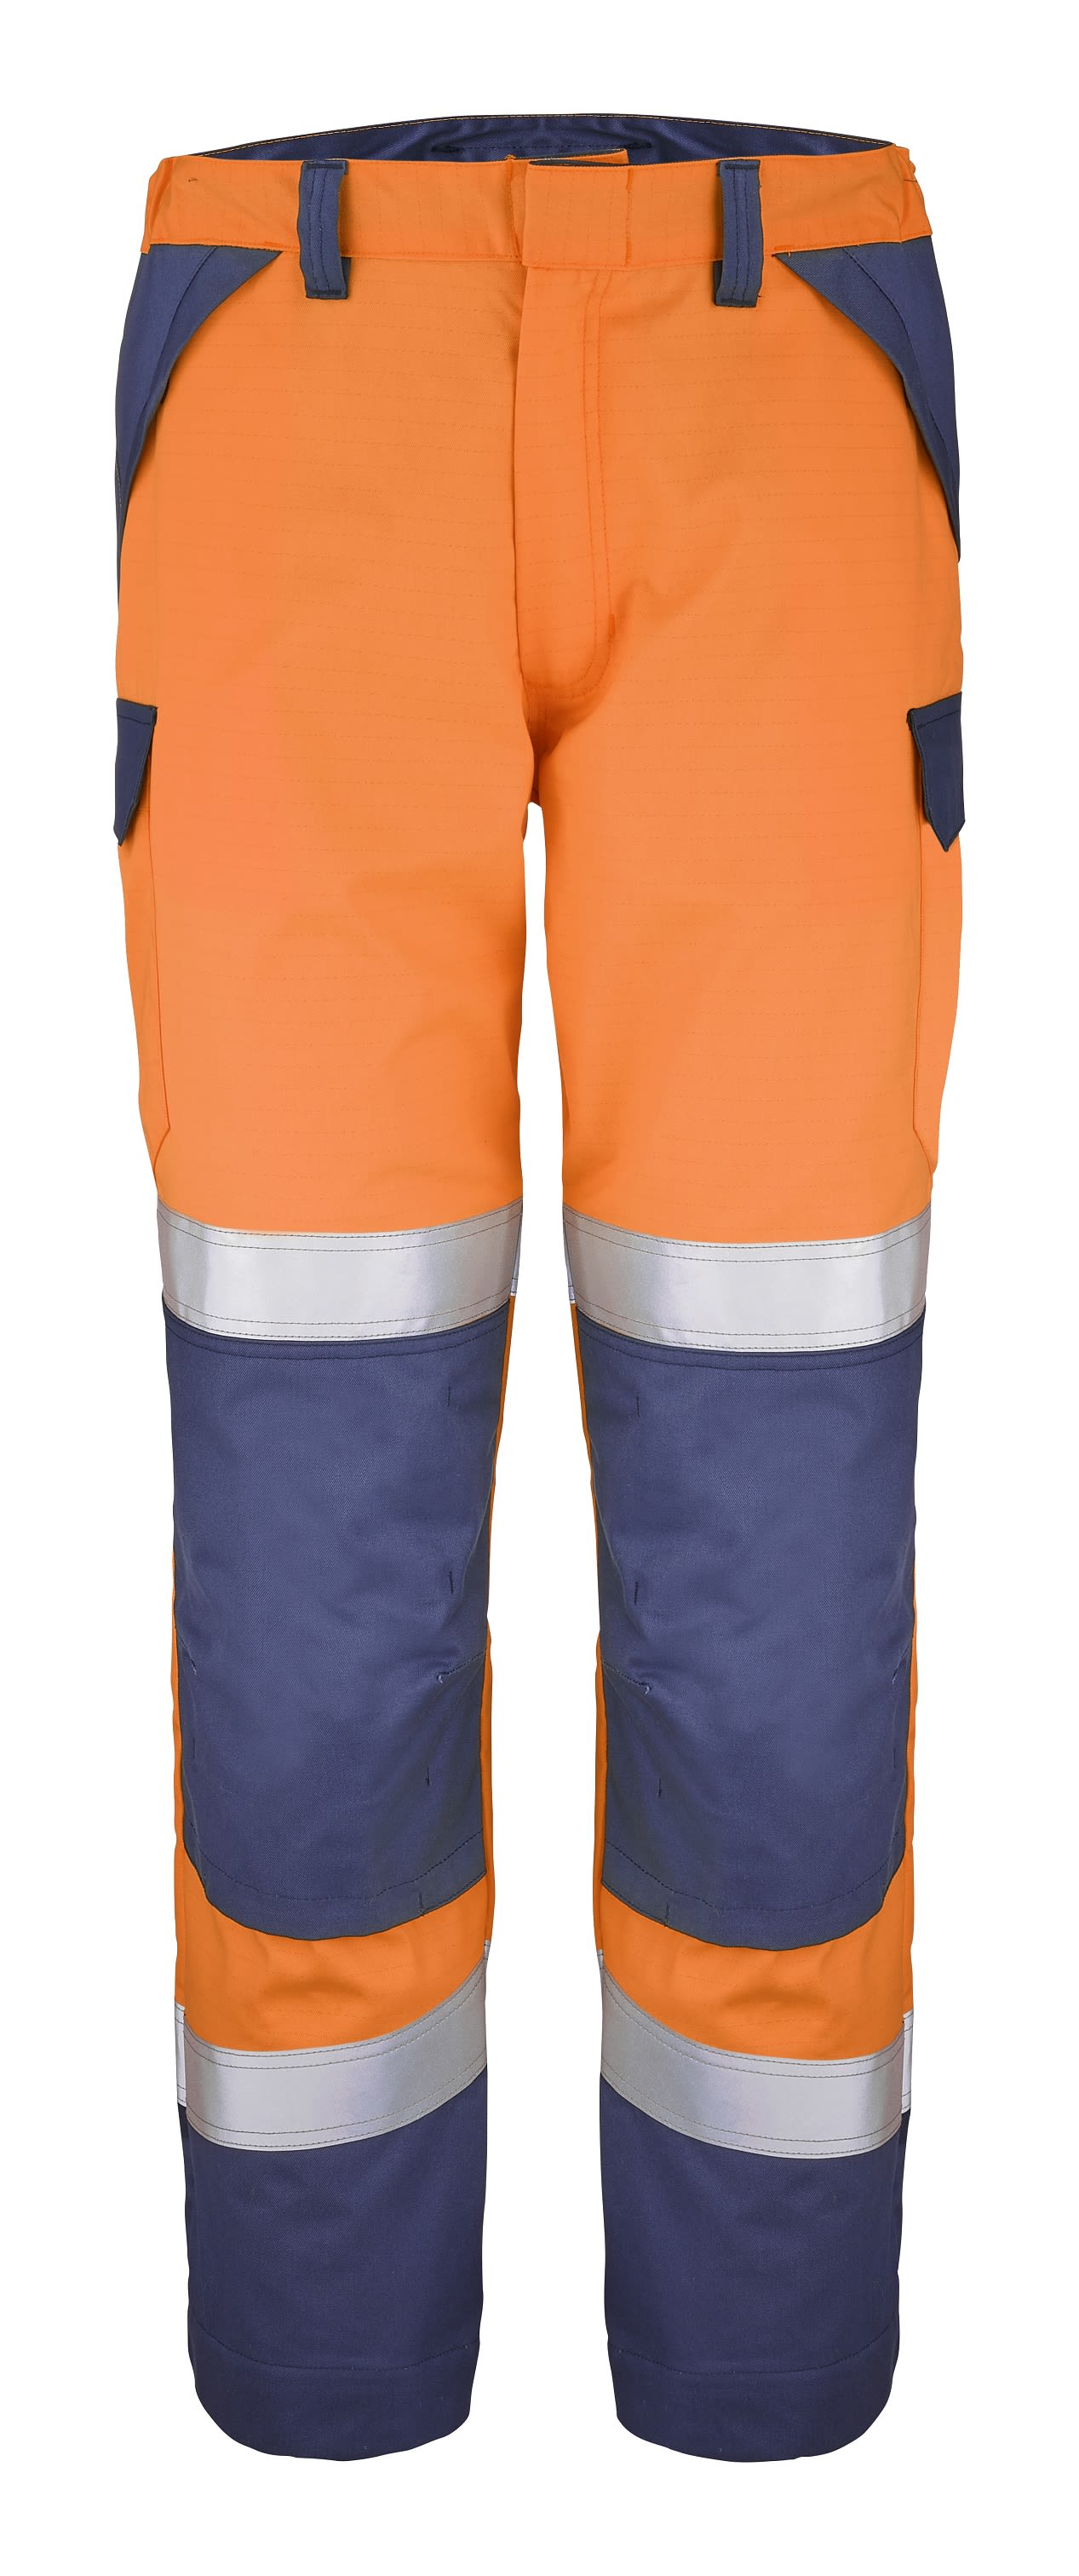 Pantalon haute visibilité Cepovett Safety Atex HV 300 XP, taille 2XL, Orange/bleu marine, Mixte, Ignifuge